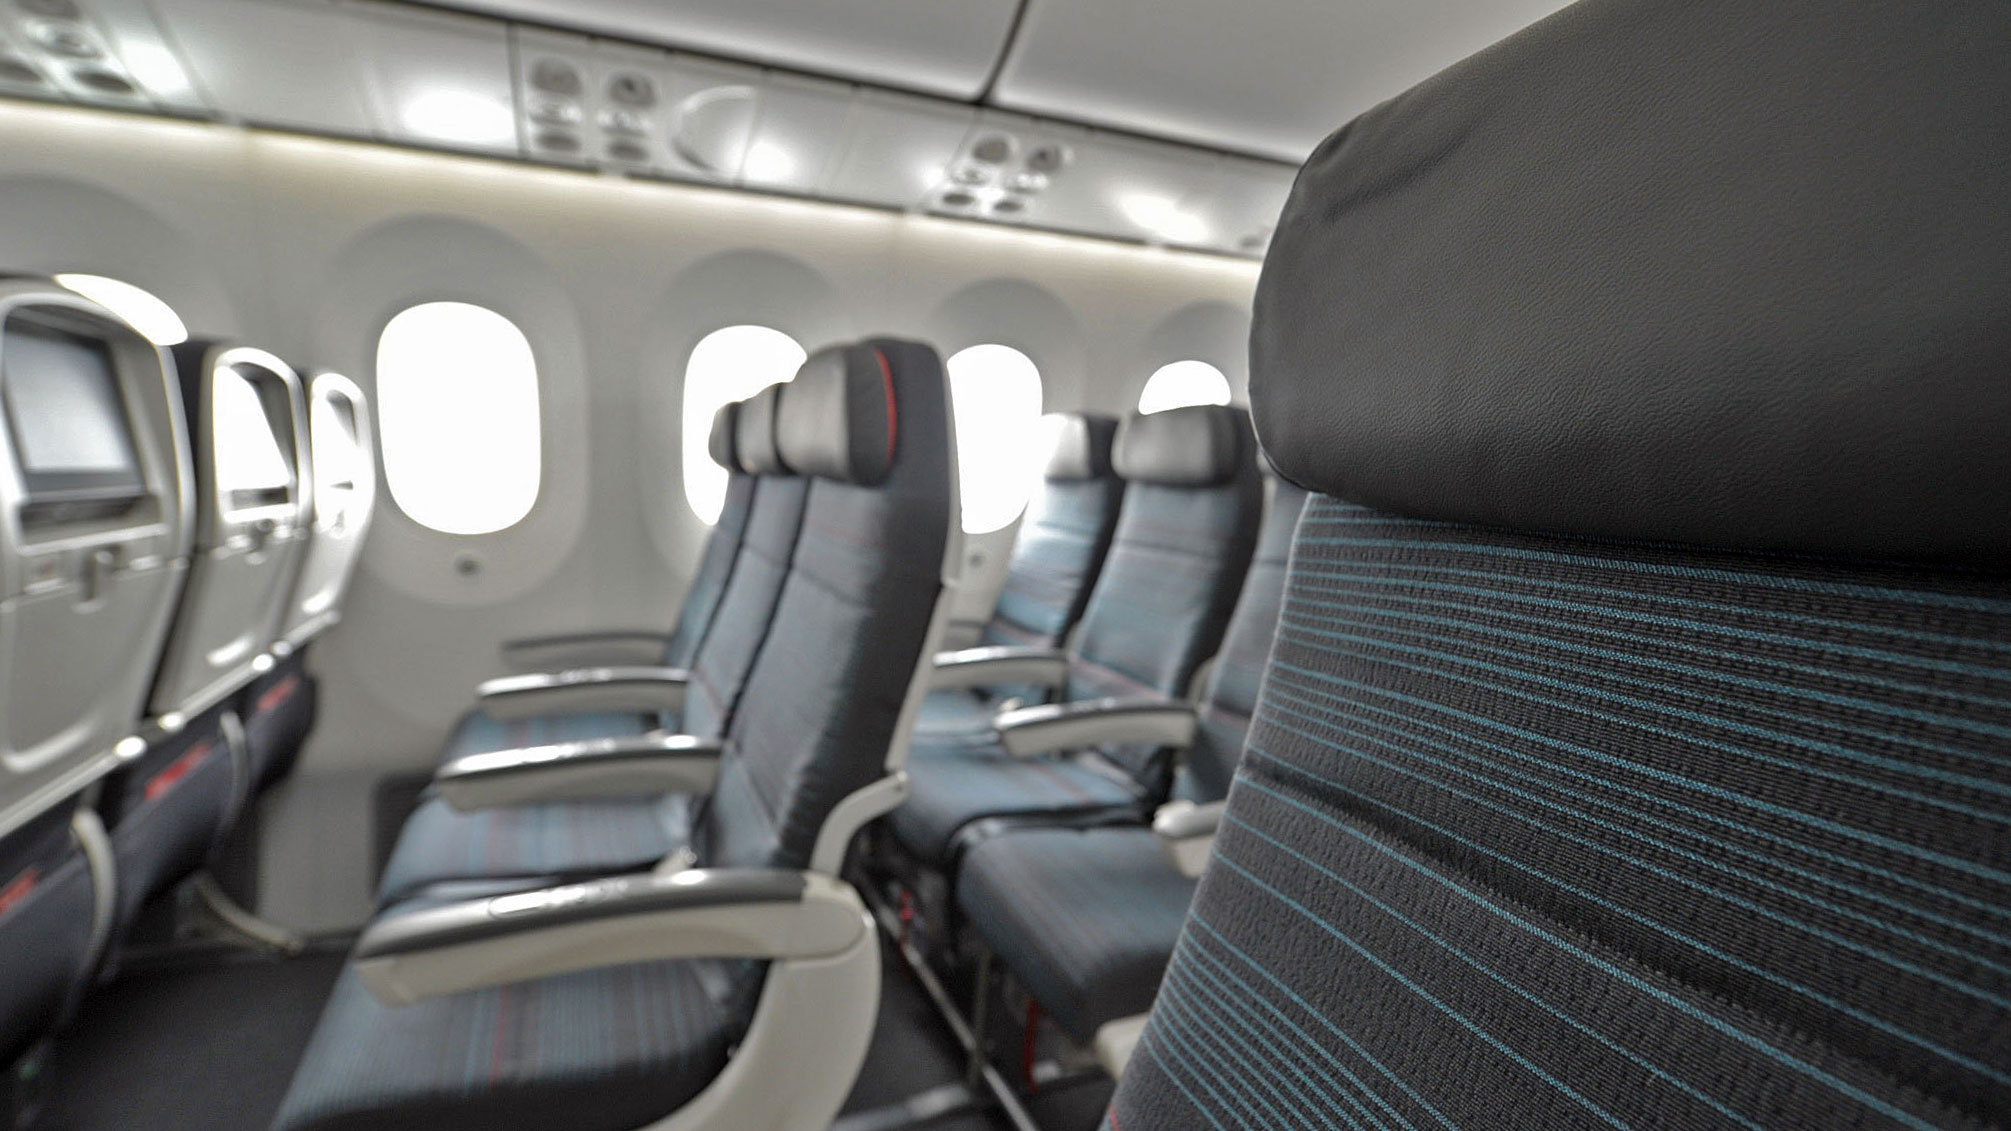 Gta Woman Has Terrifying Flight Experience Hopes For Policy